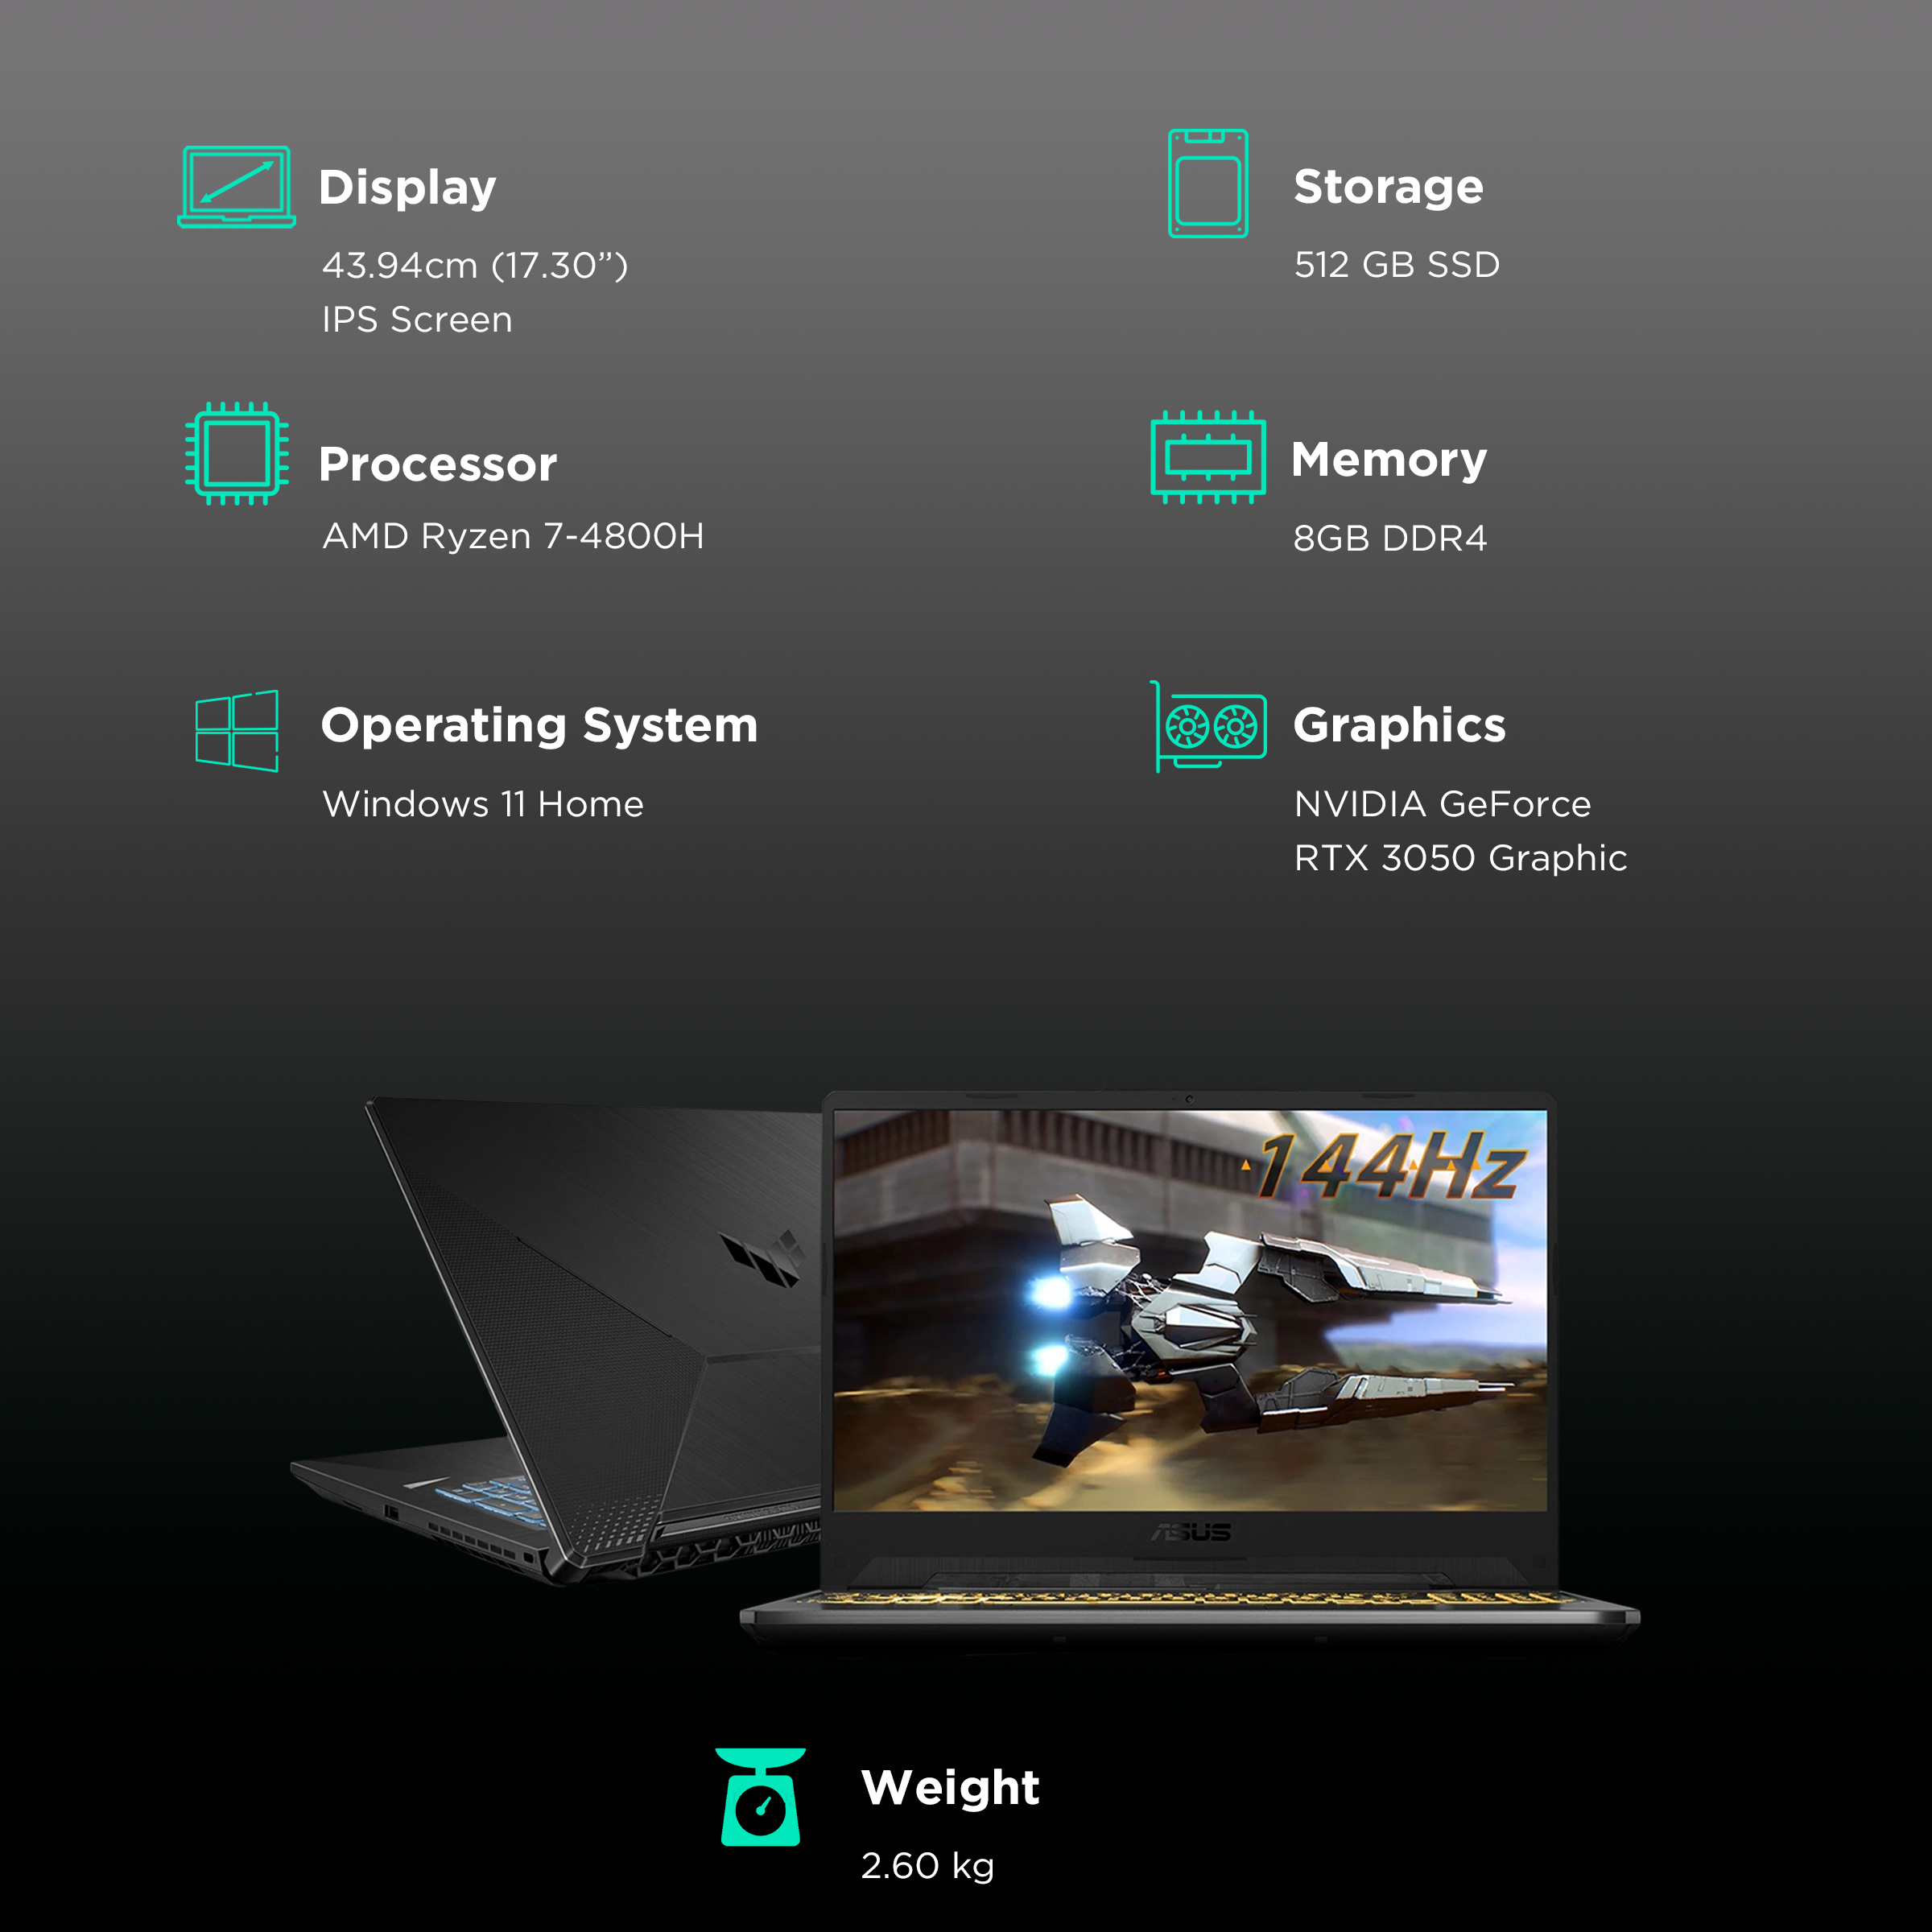 ASUS TUF Gaming A17 Gaming Laptop, 17.3” 144Hz FHD IPS-Type Display, AMD  Ryzen 5 4600H, GeForce GTX 1650, 8GB DDR4, 512GB PCIe SSD, RGB Keyboard